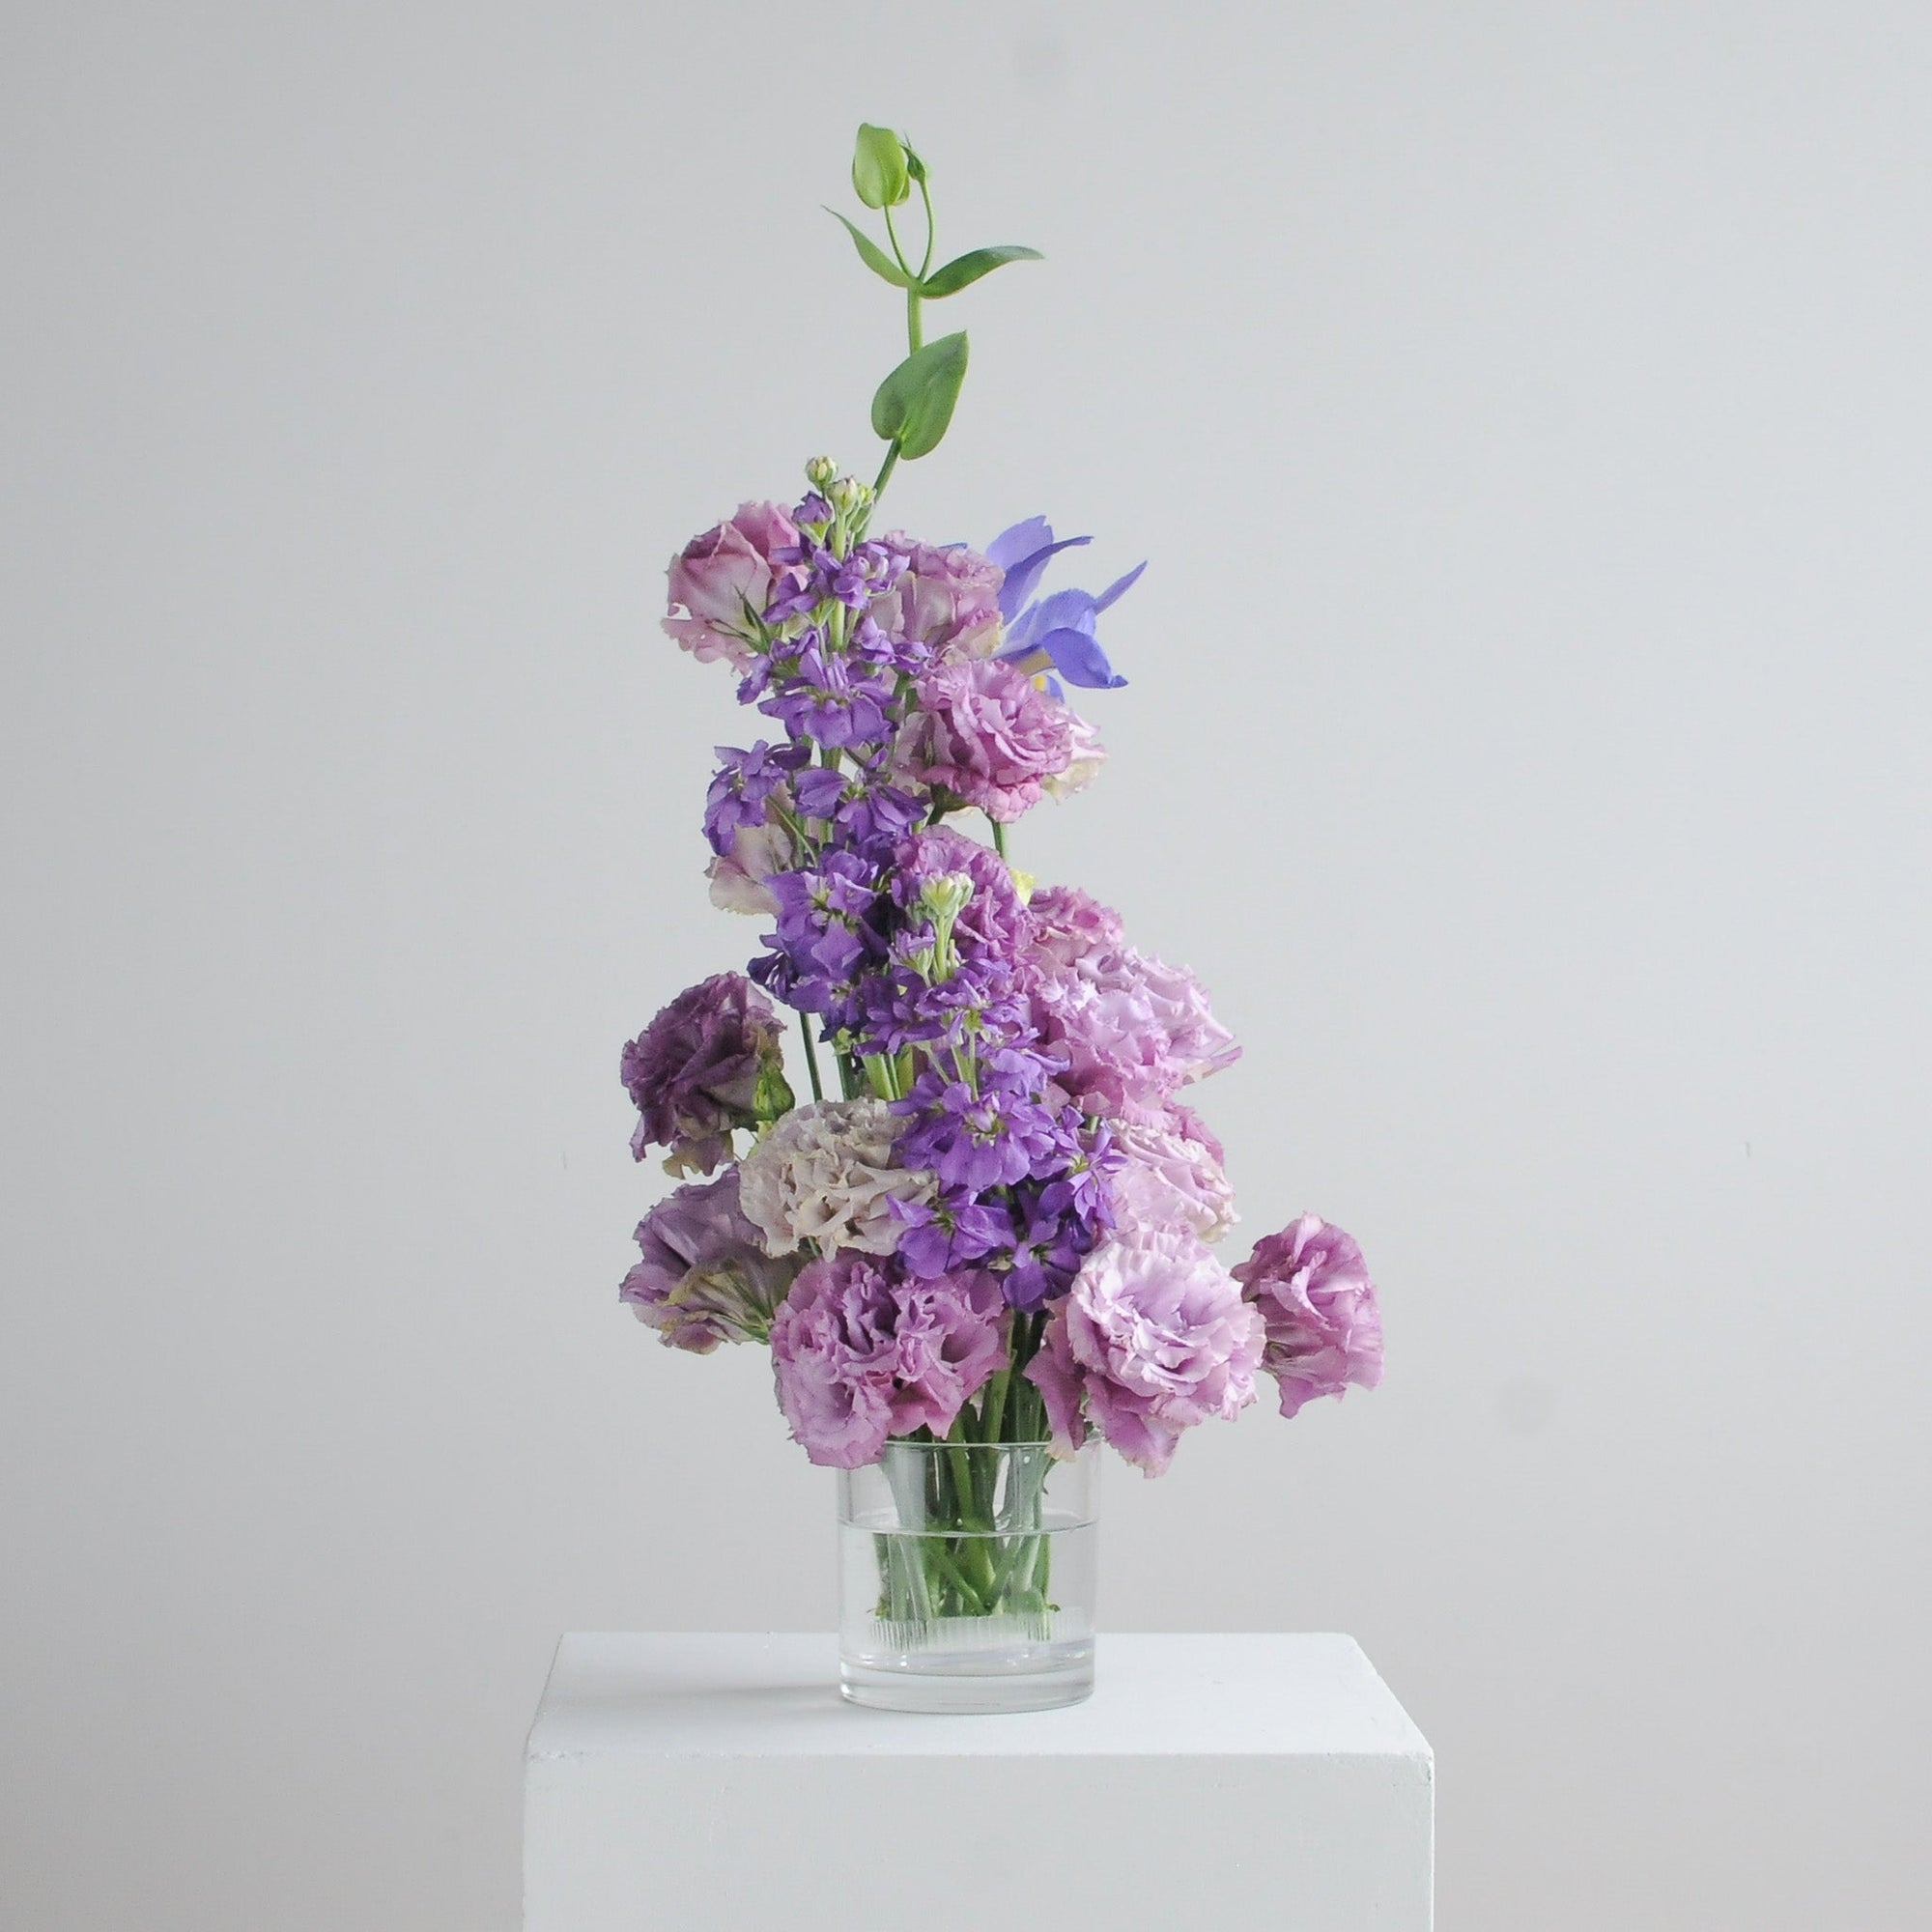 Monochrome Vase Arrangement